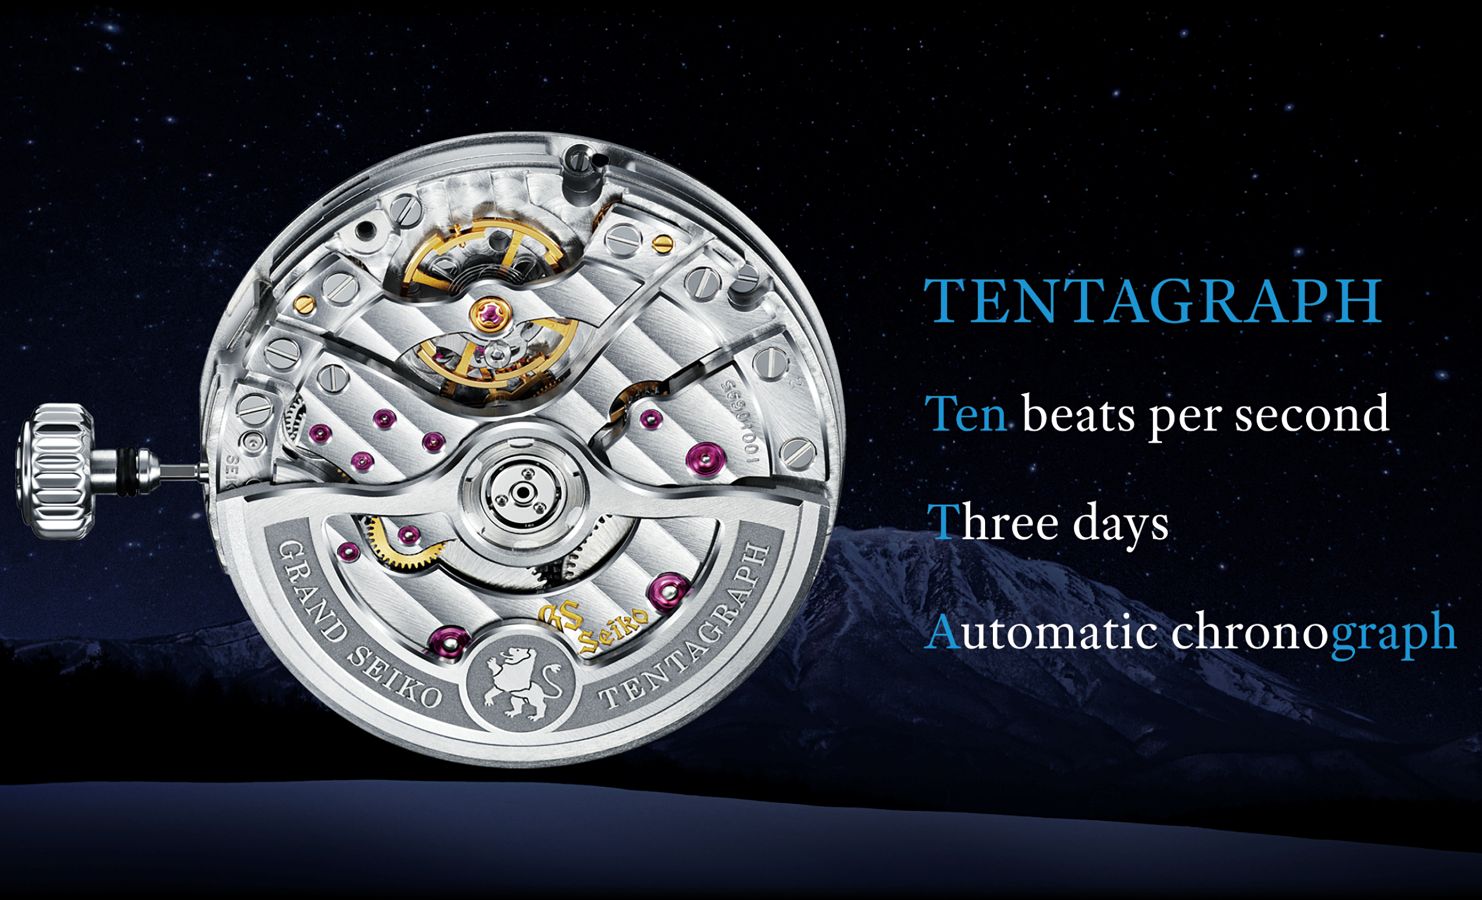 Grand Seiko 'Tentagraph' Hi Beat Automatic Chronograph